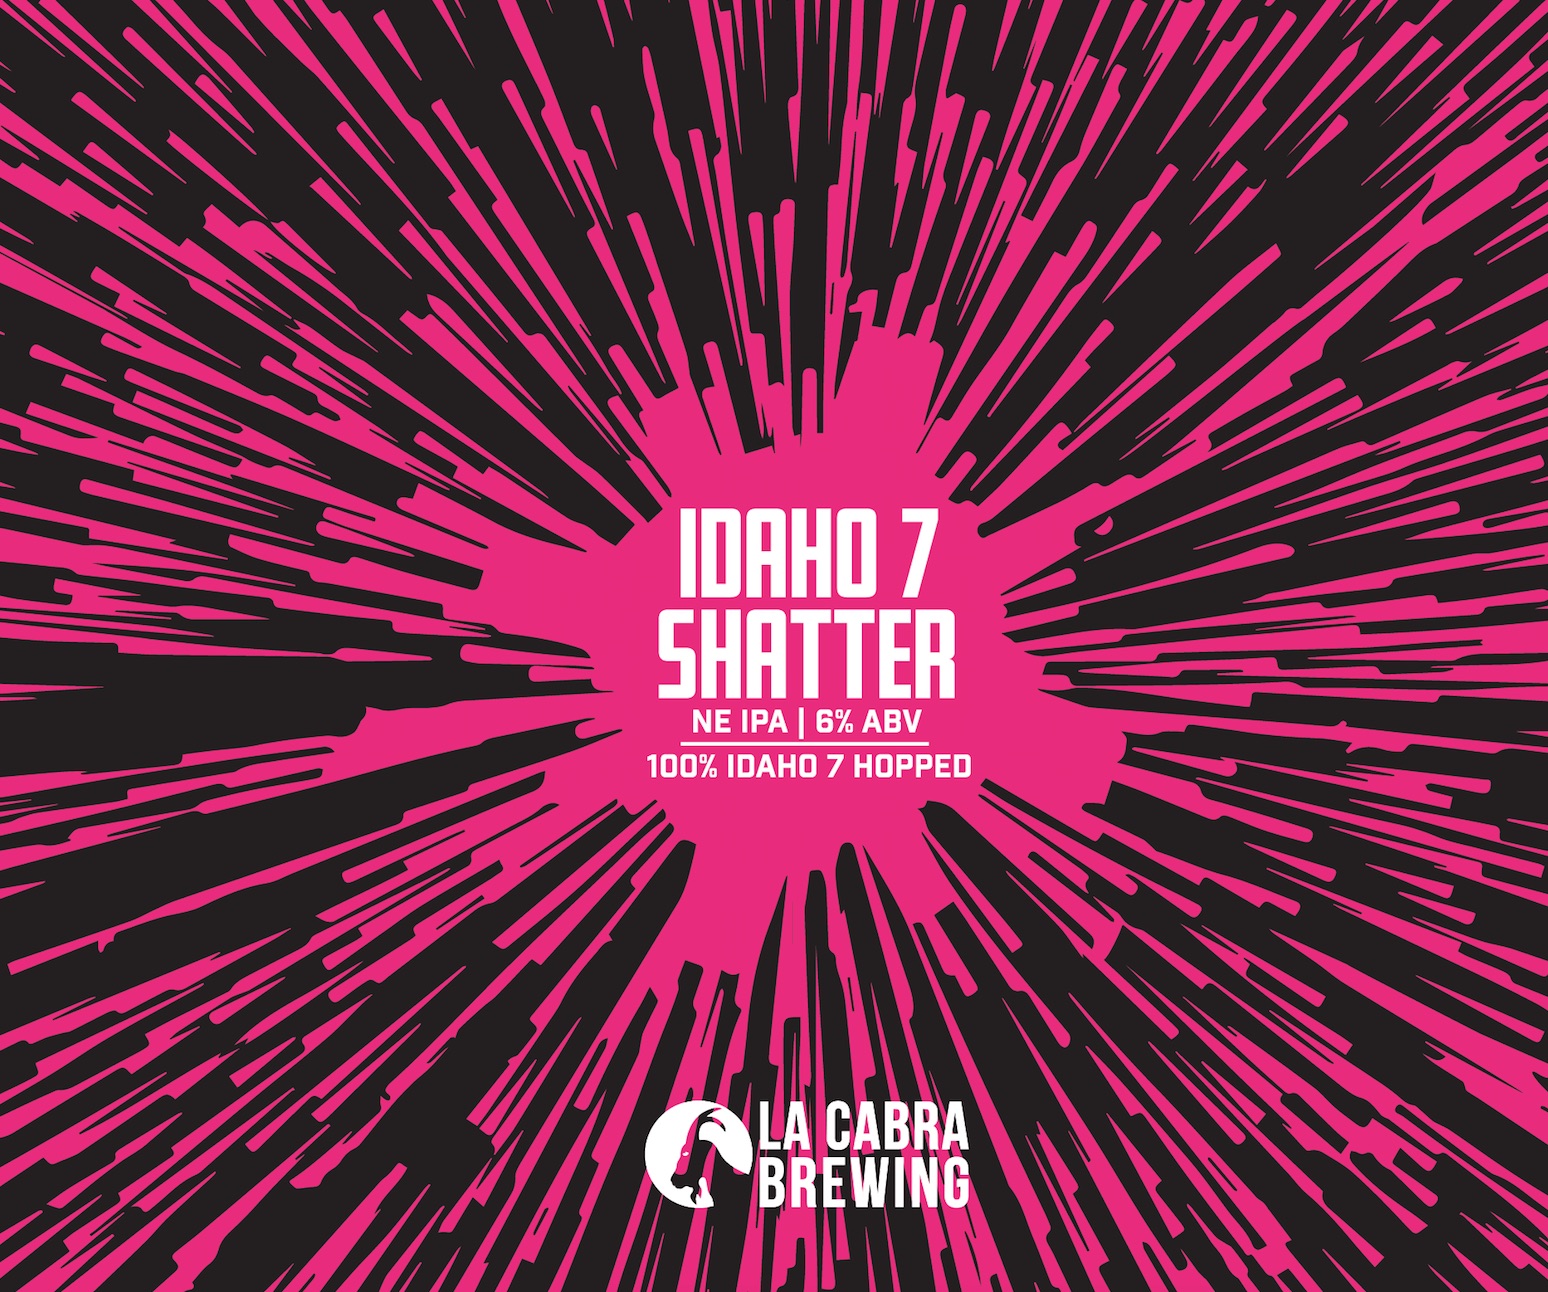 Shat - Idaho 7 Shatter_CUT_JPEG